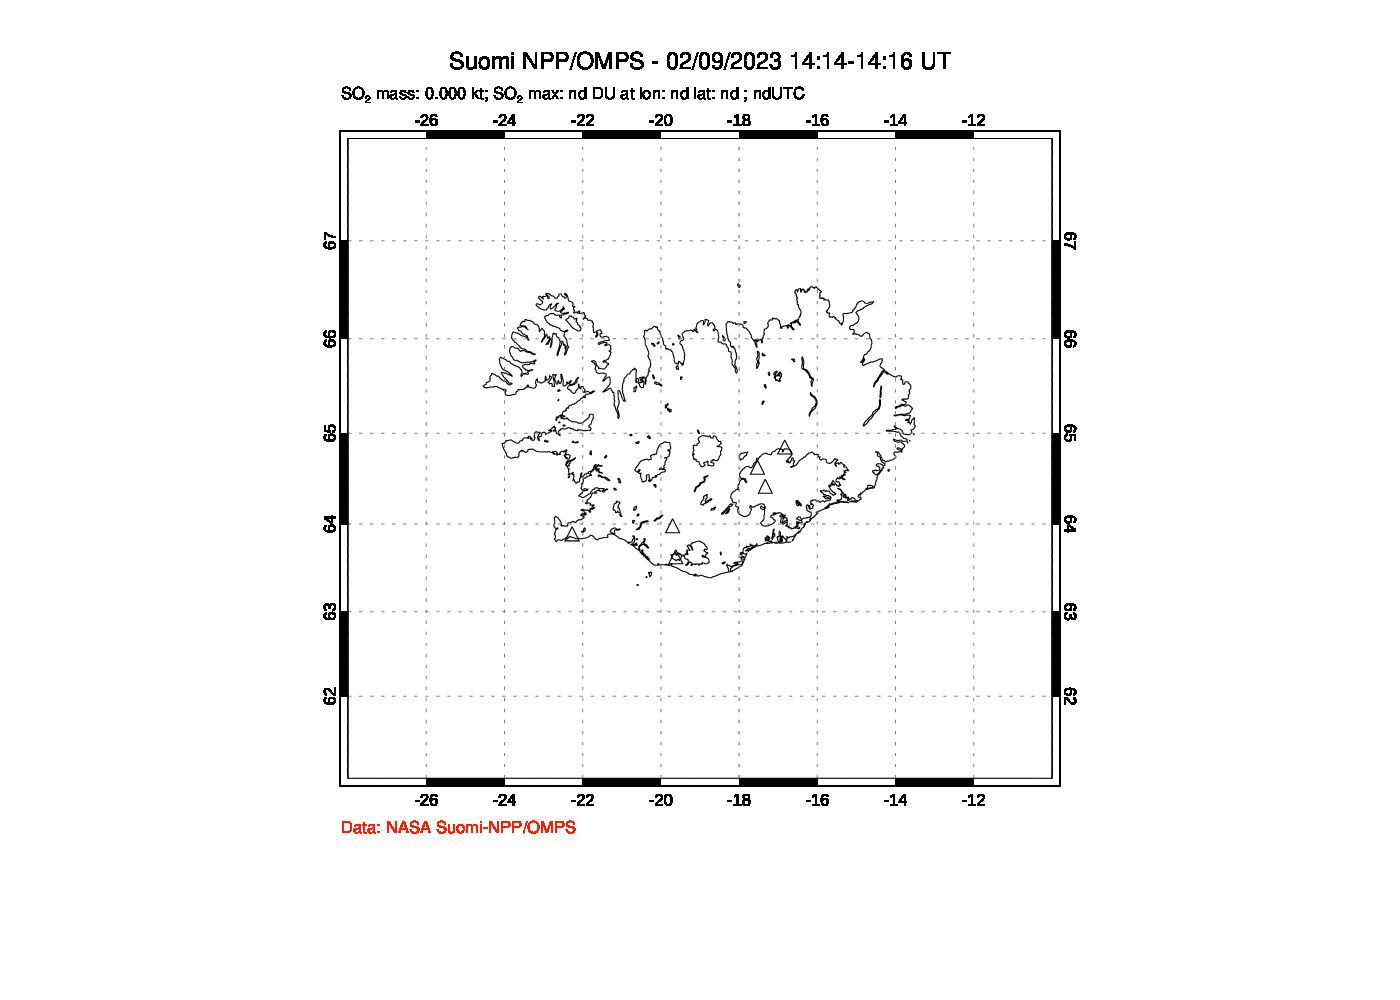 A sulfur dioxide image over Iceland on Feb 09, 2023.